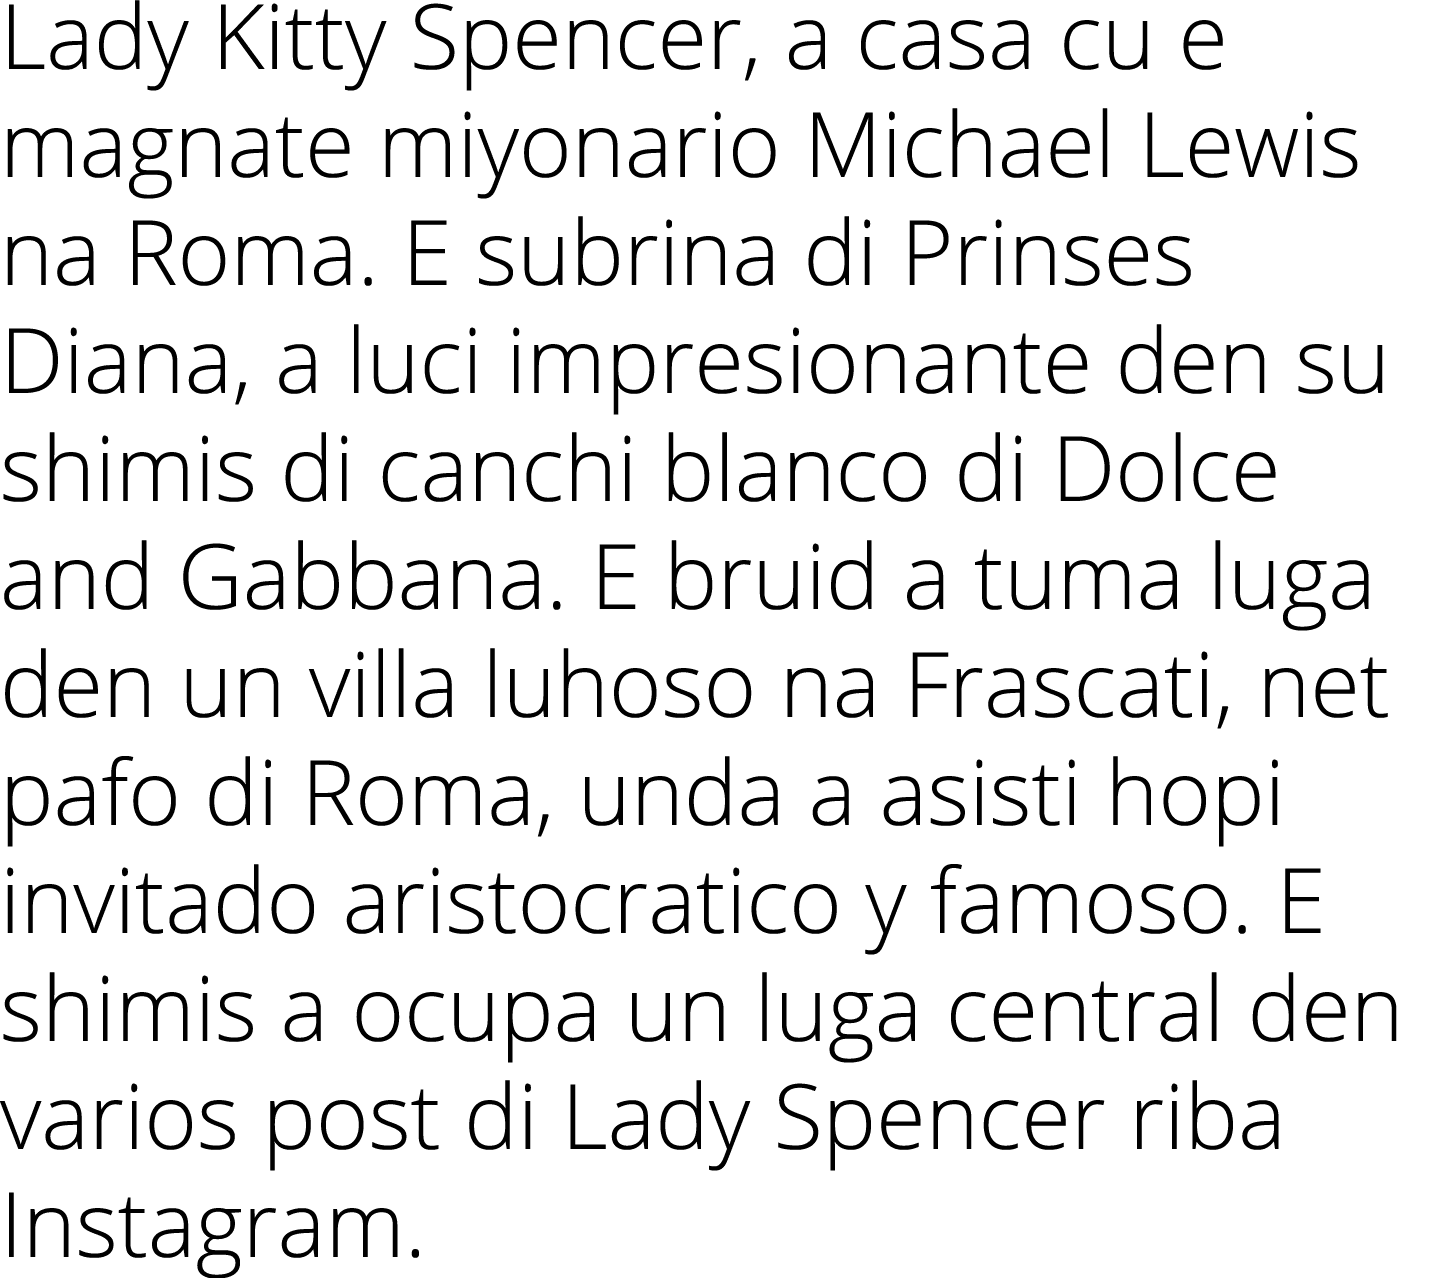 Lady Kitty Spencer, a casa cu e magnate miyonario Michael Lewis na Roma  E subrina di Prinses Diana, a luci impresion   